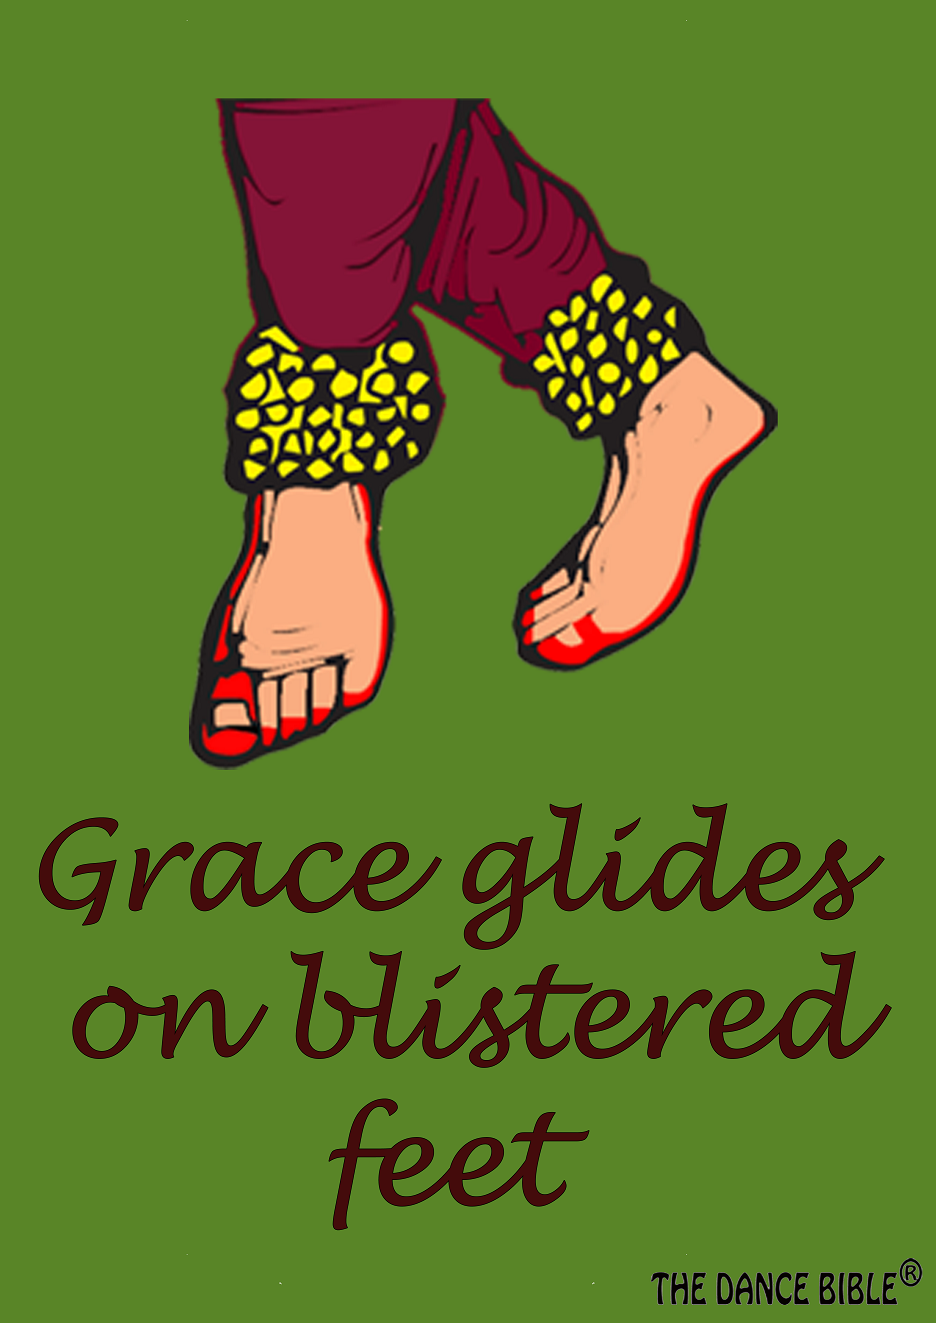 Blistered Feet Classical Dance Poster